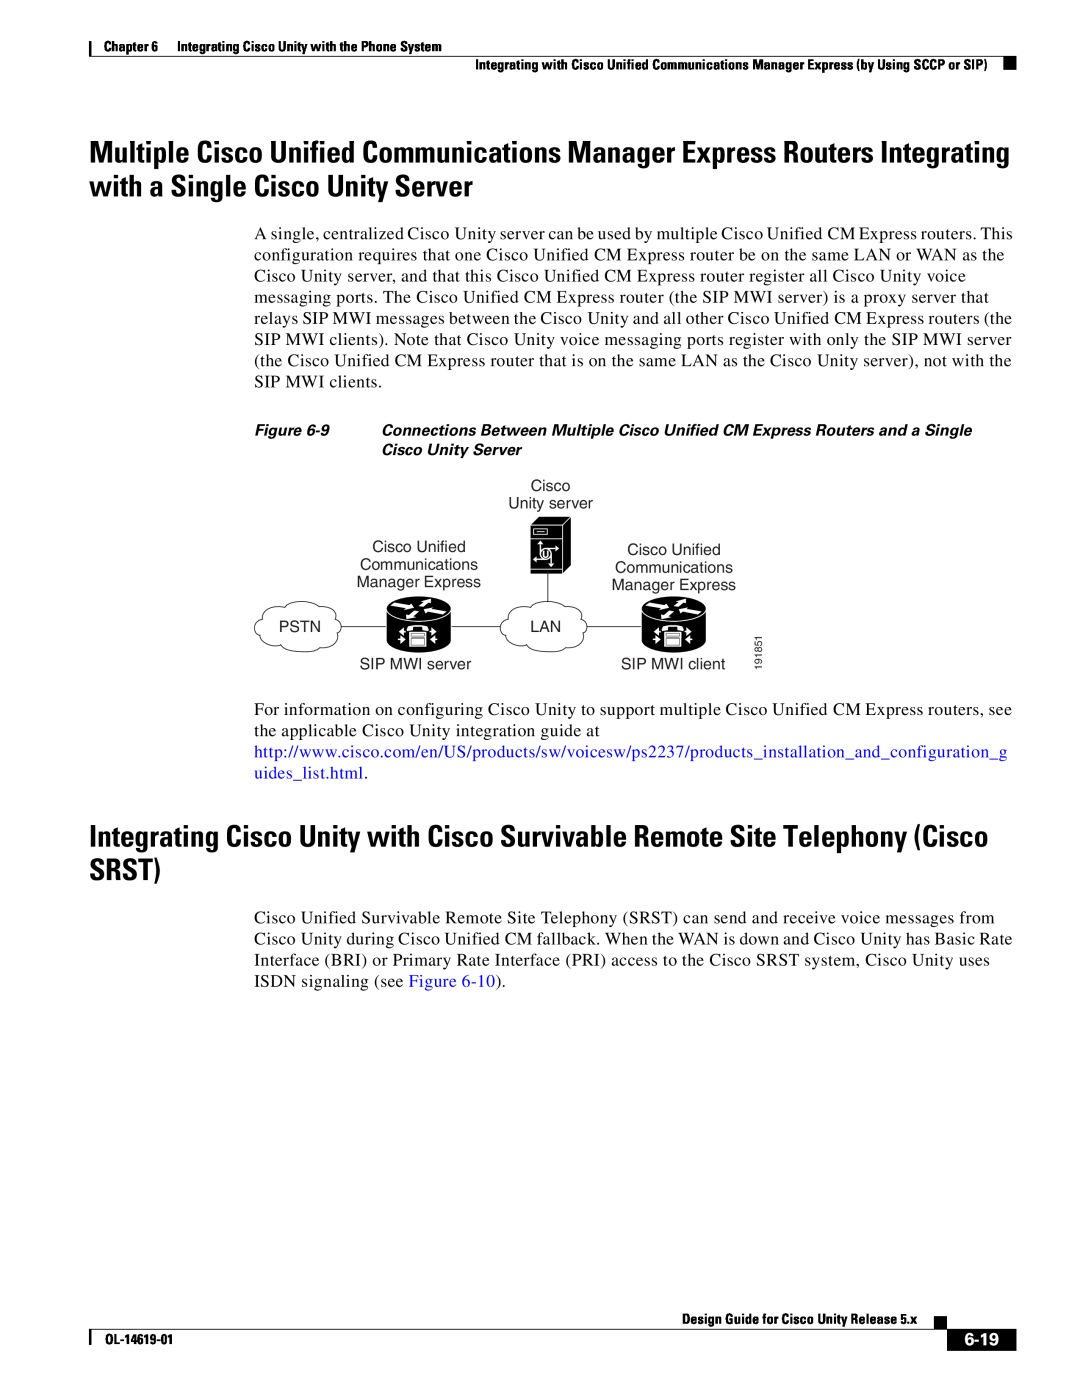 Cisco Systems OL-14619-01 manual 